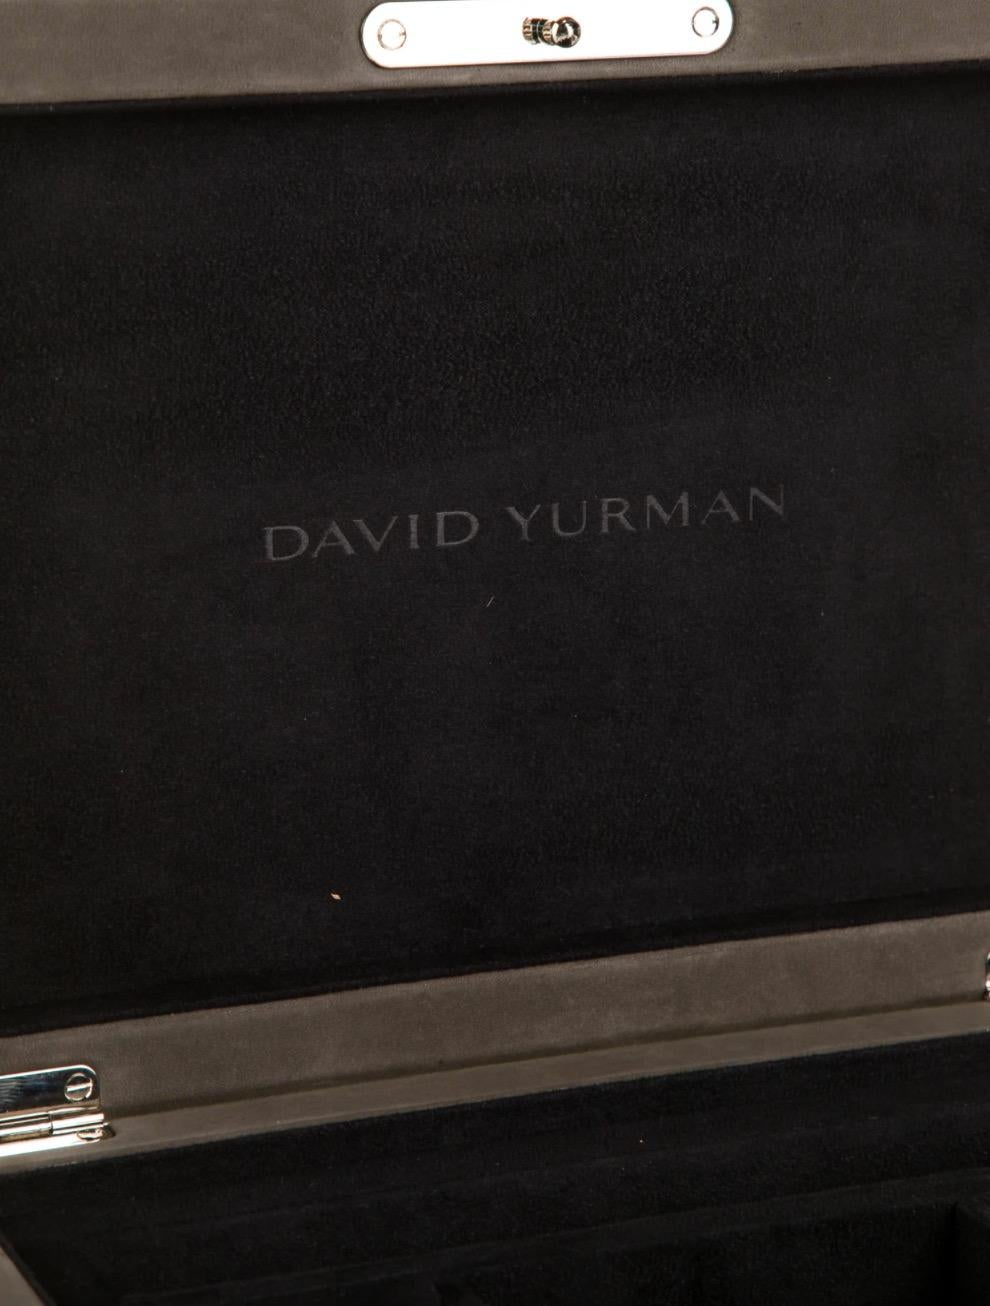 david yurman jewelry bag